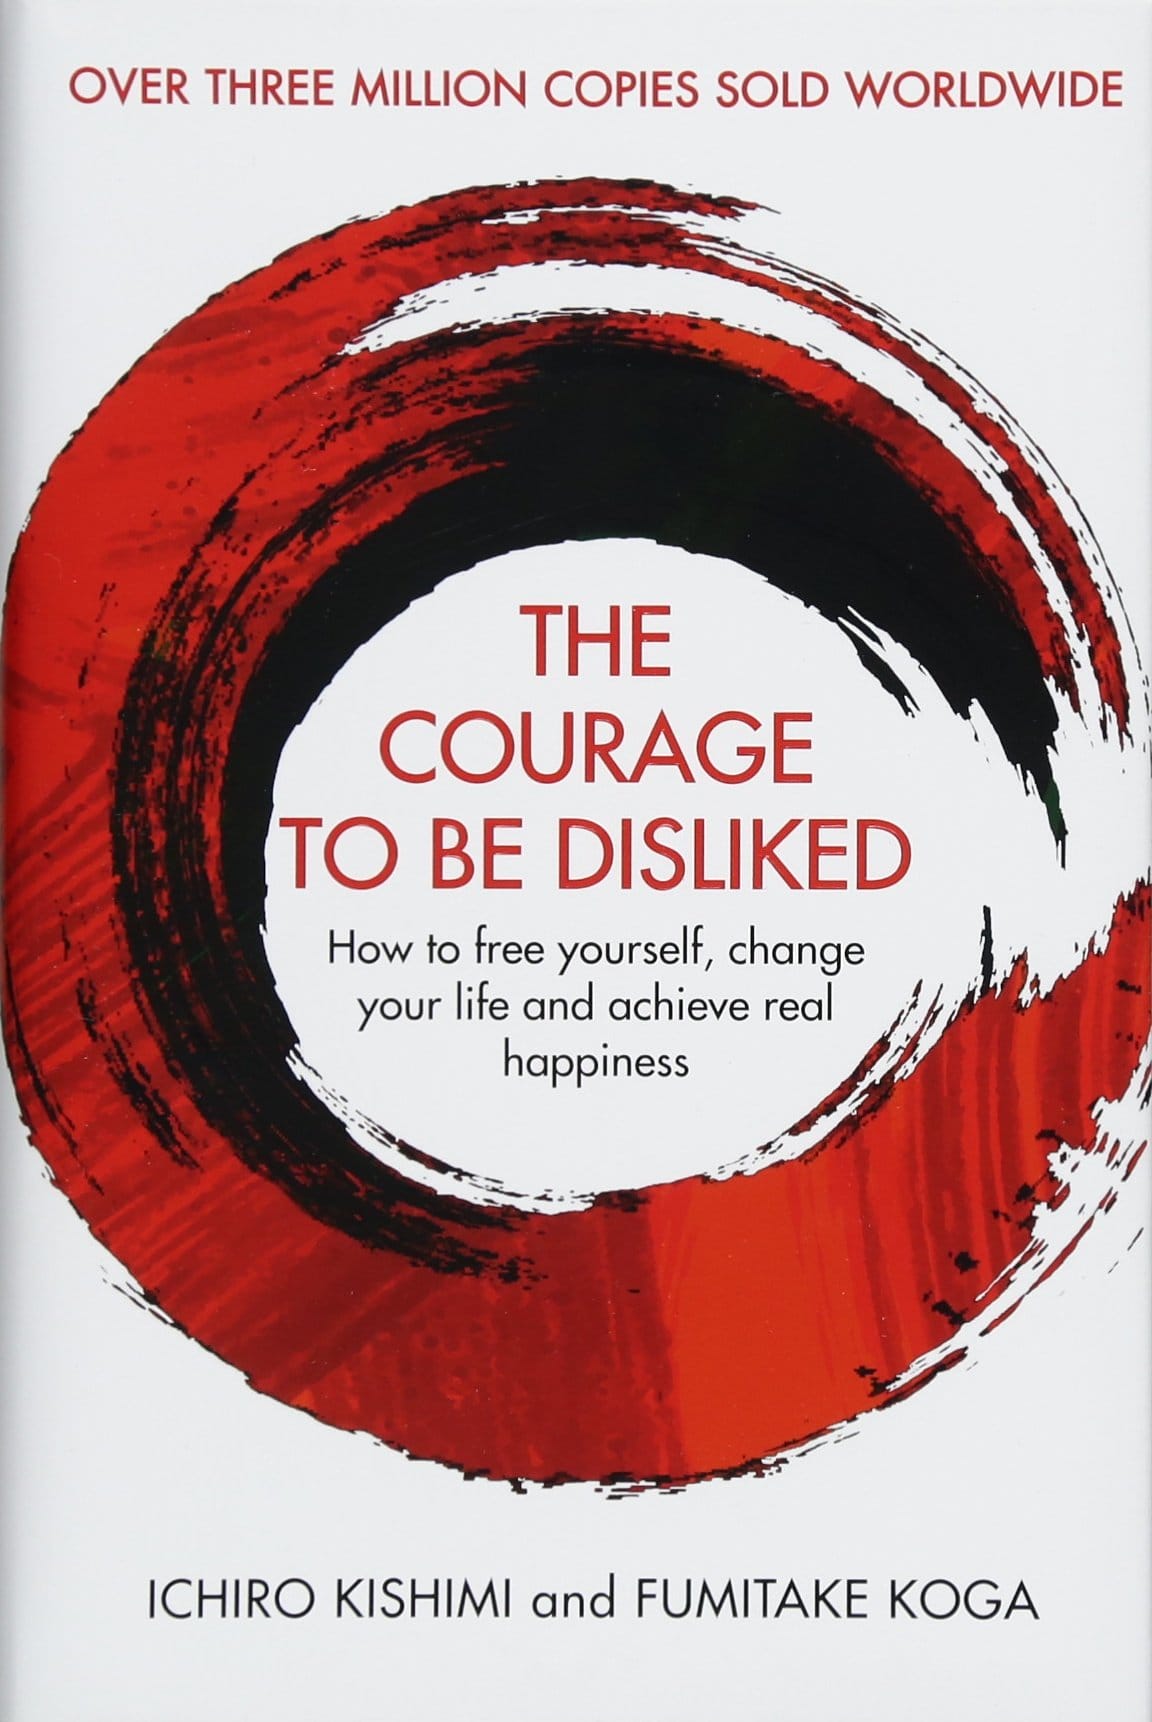 The Courage to be Disliked by Ichiro Kishimi and Fumitake Koga